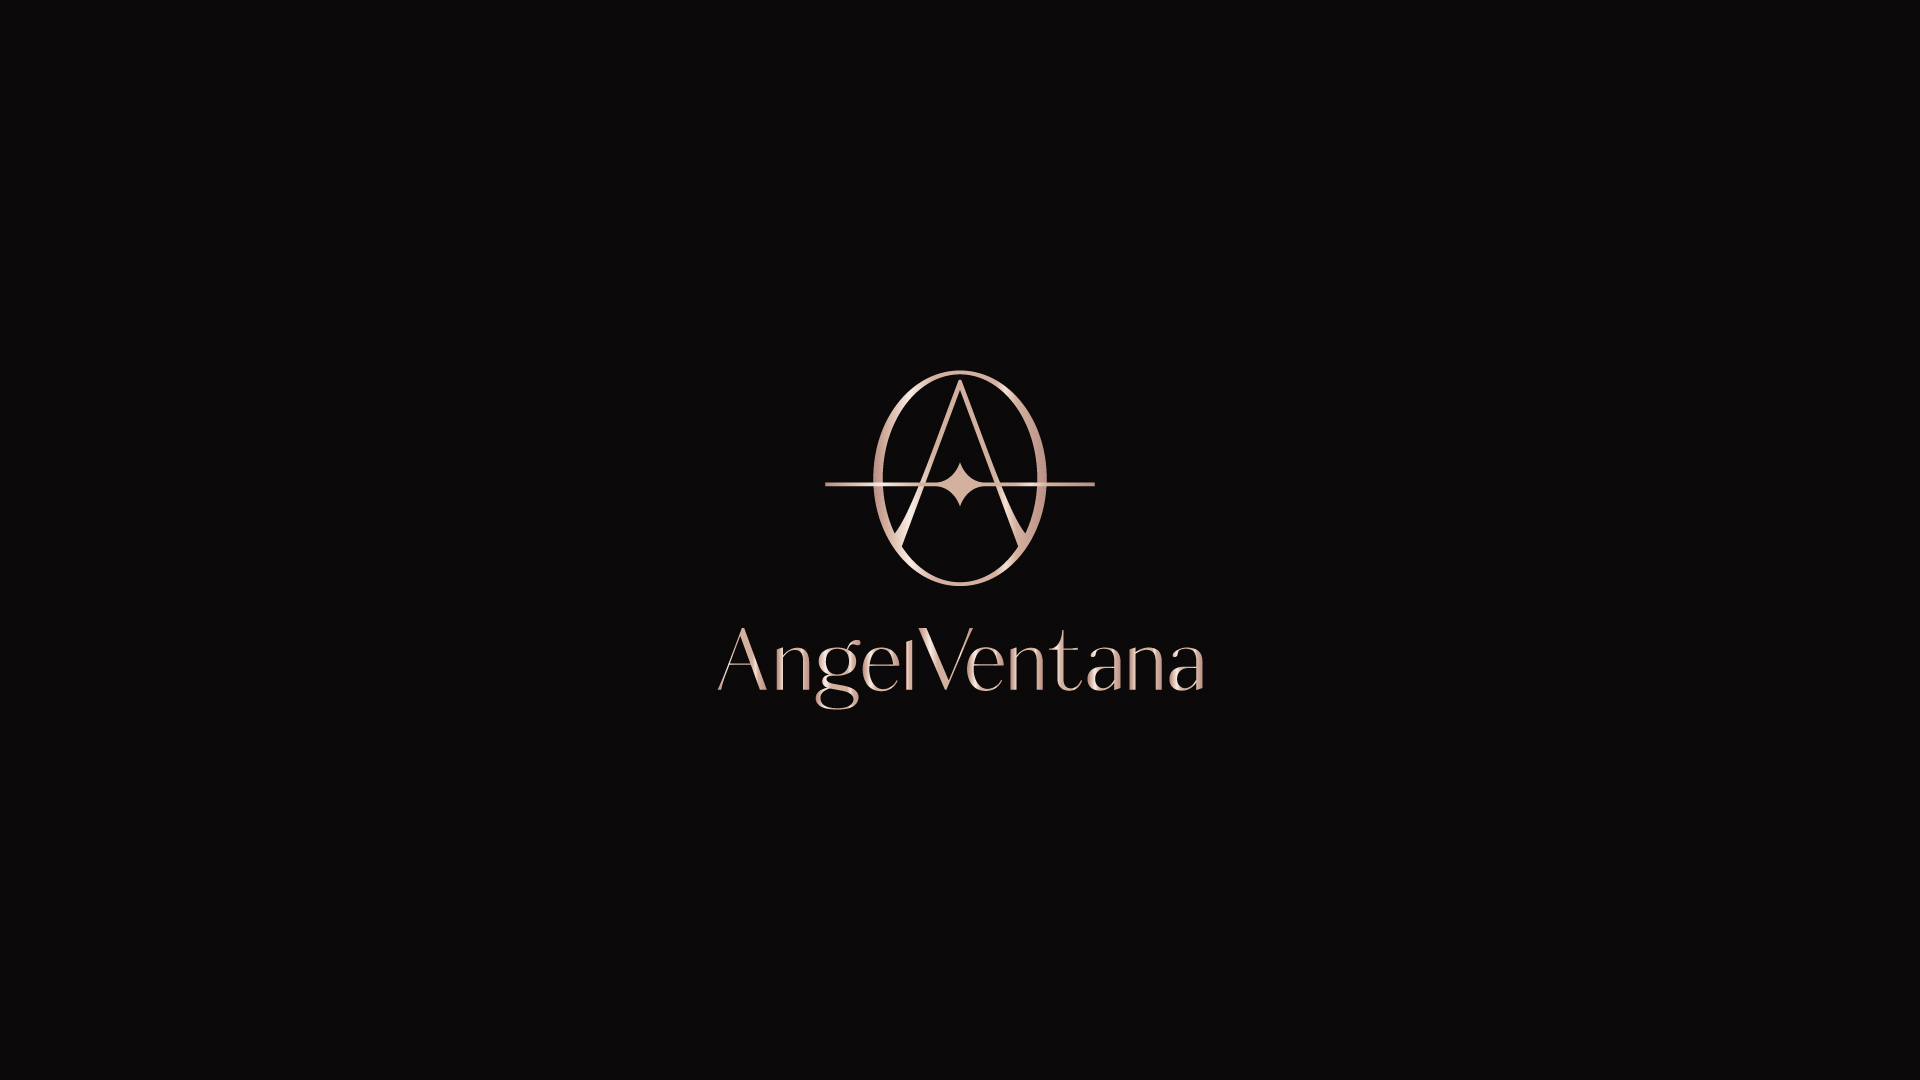 Angelventana品牌形象设计提案-06.jpg